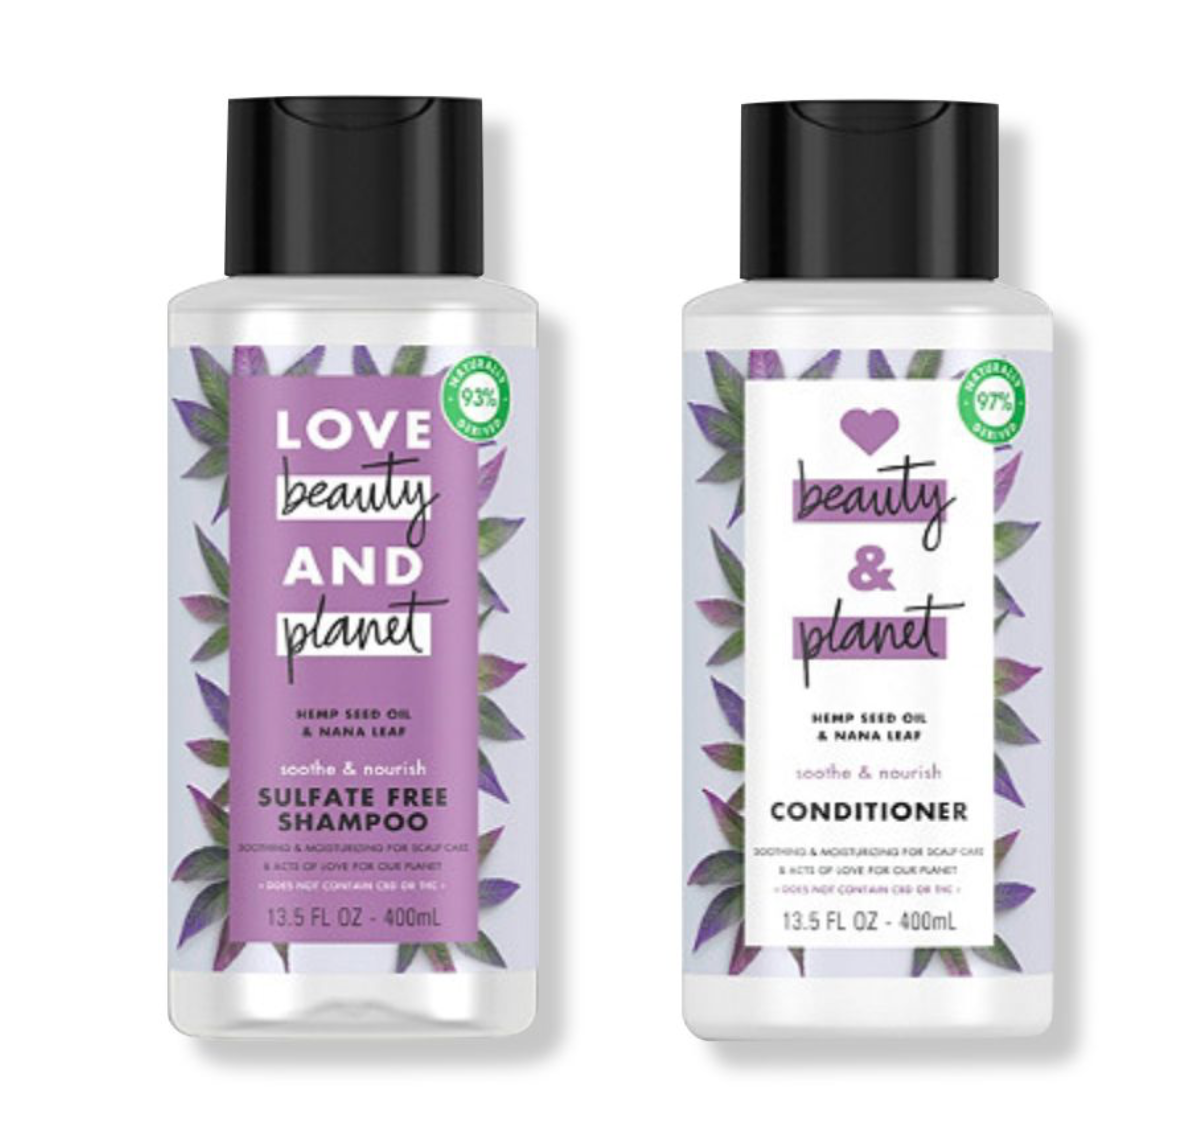  Love Beauty and Planet Hemp Seed Oil & Nana Leaf Soothe & Nourish Shampoo & Conditioner